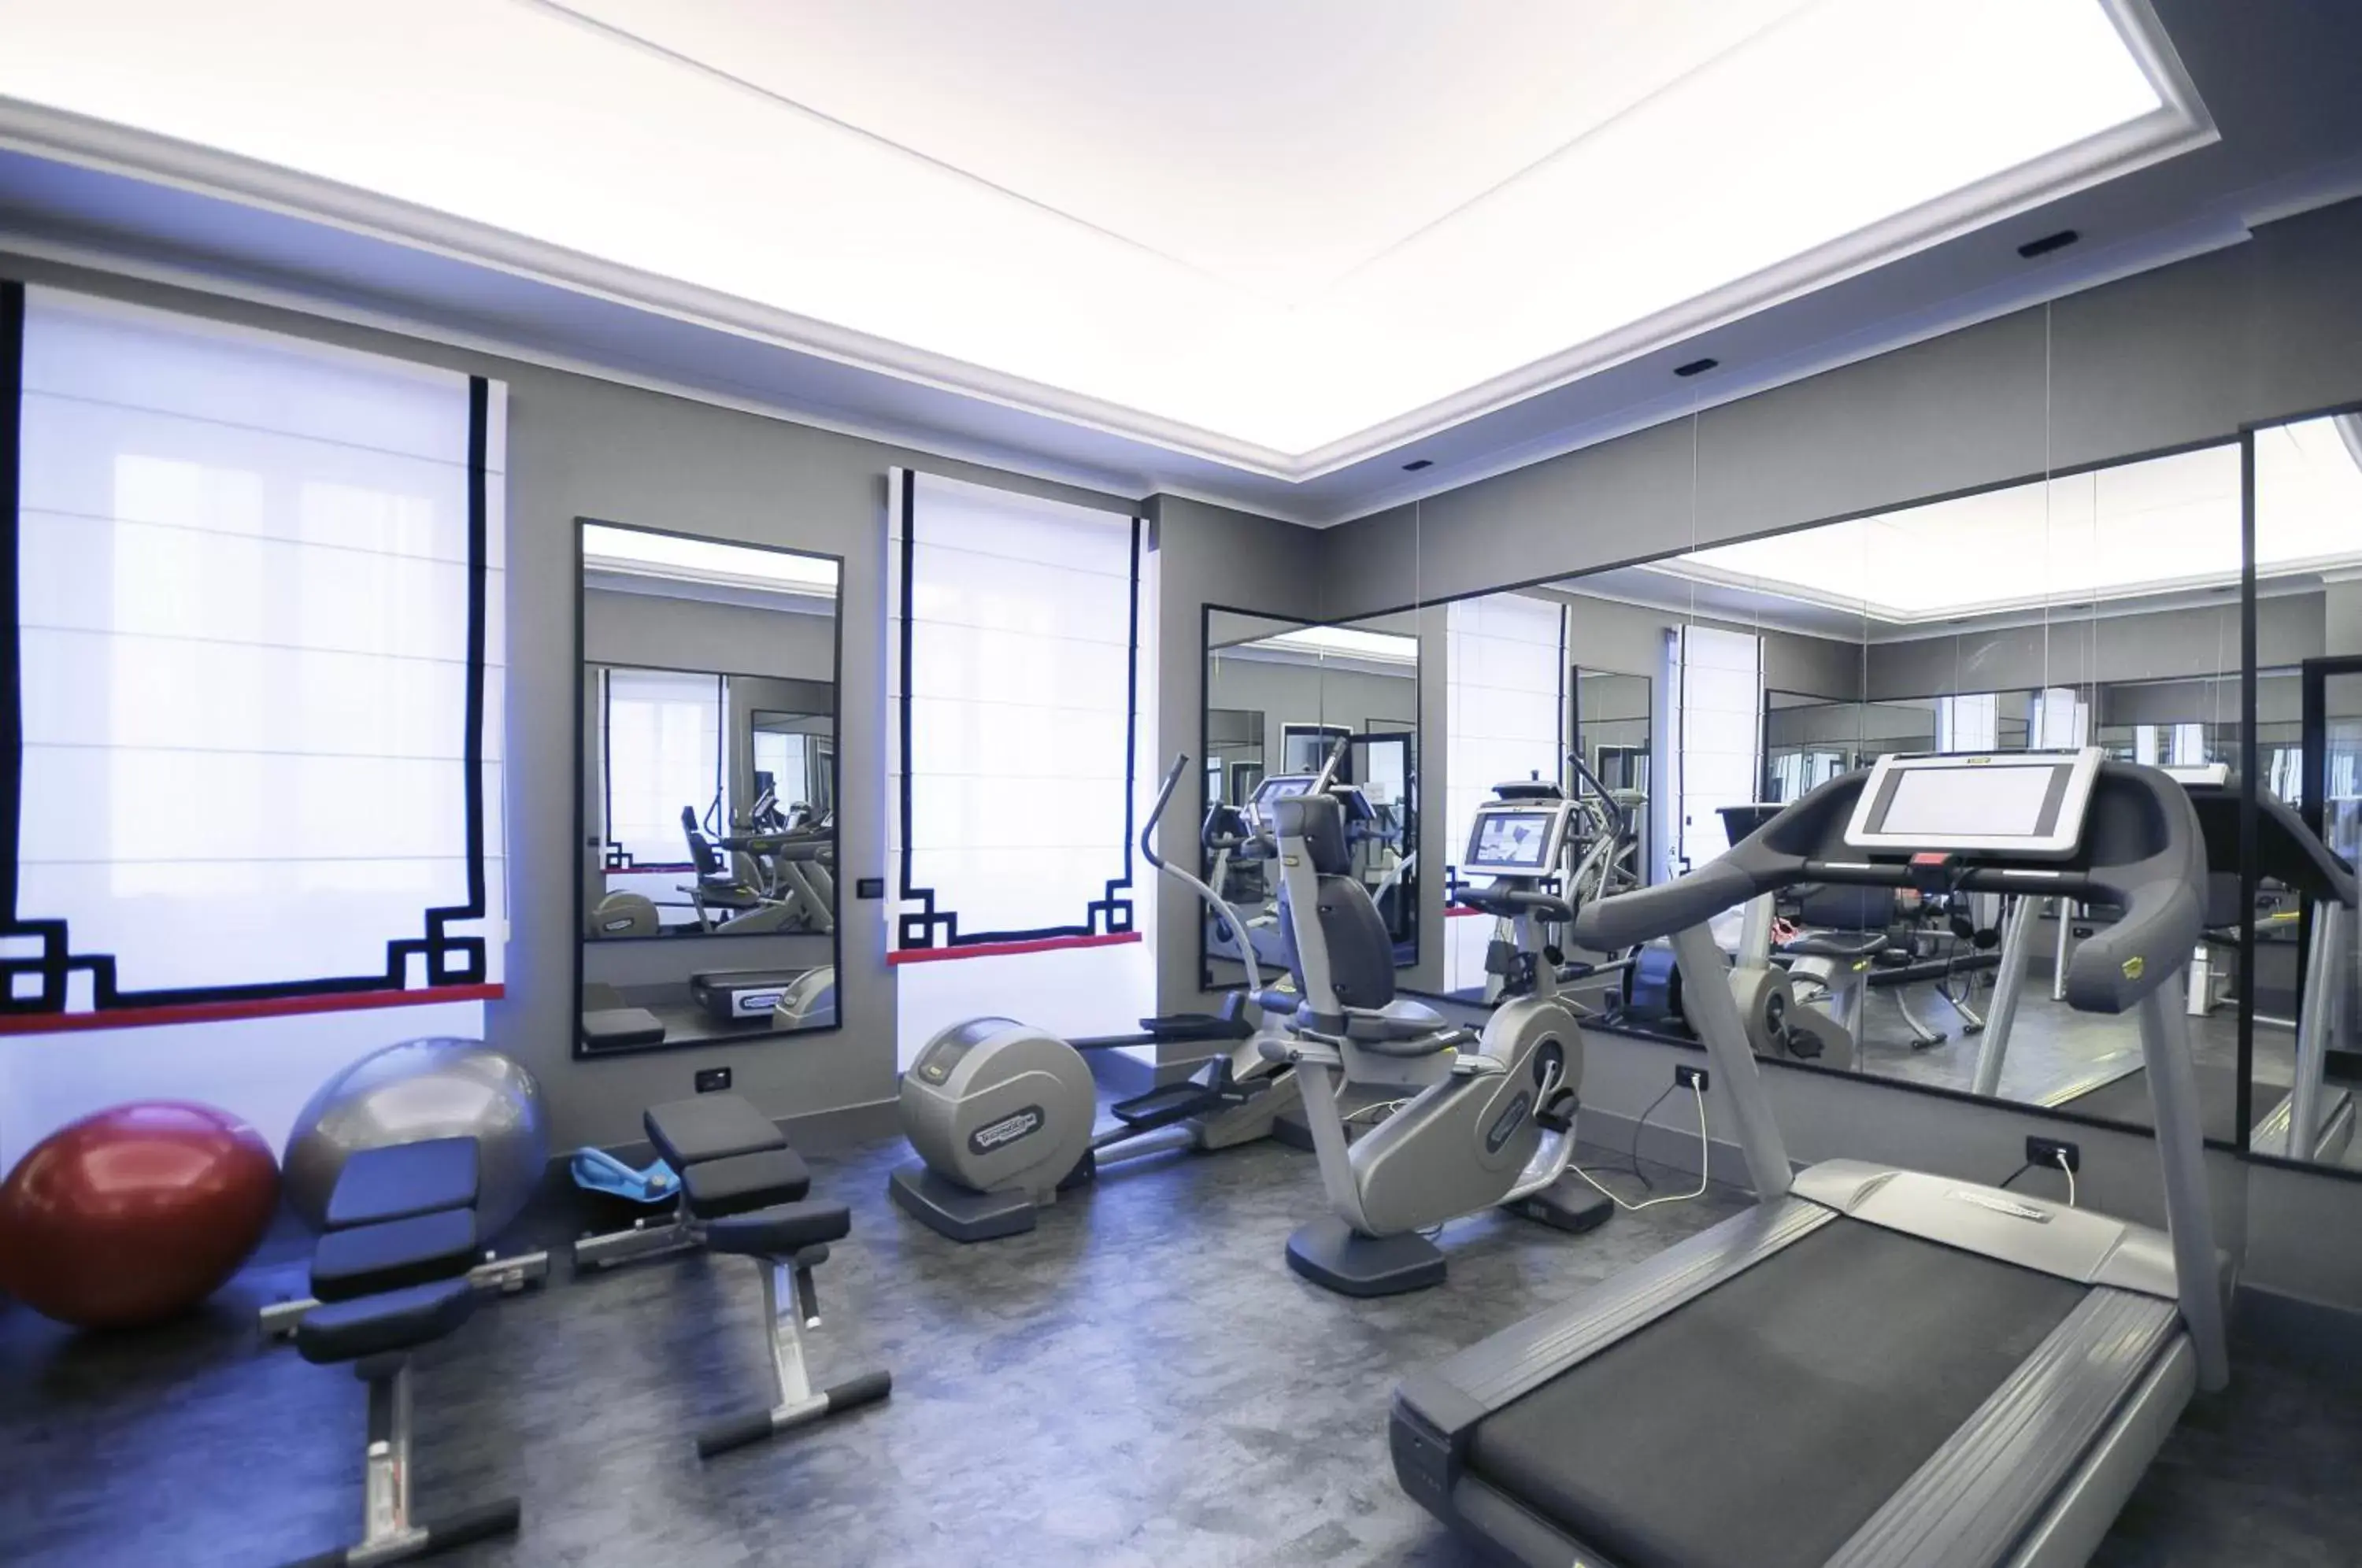 Fitness centre/facilities, Fitness Center/Facilities in Grand Hotel Santa Lucia